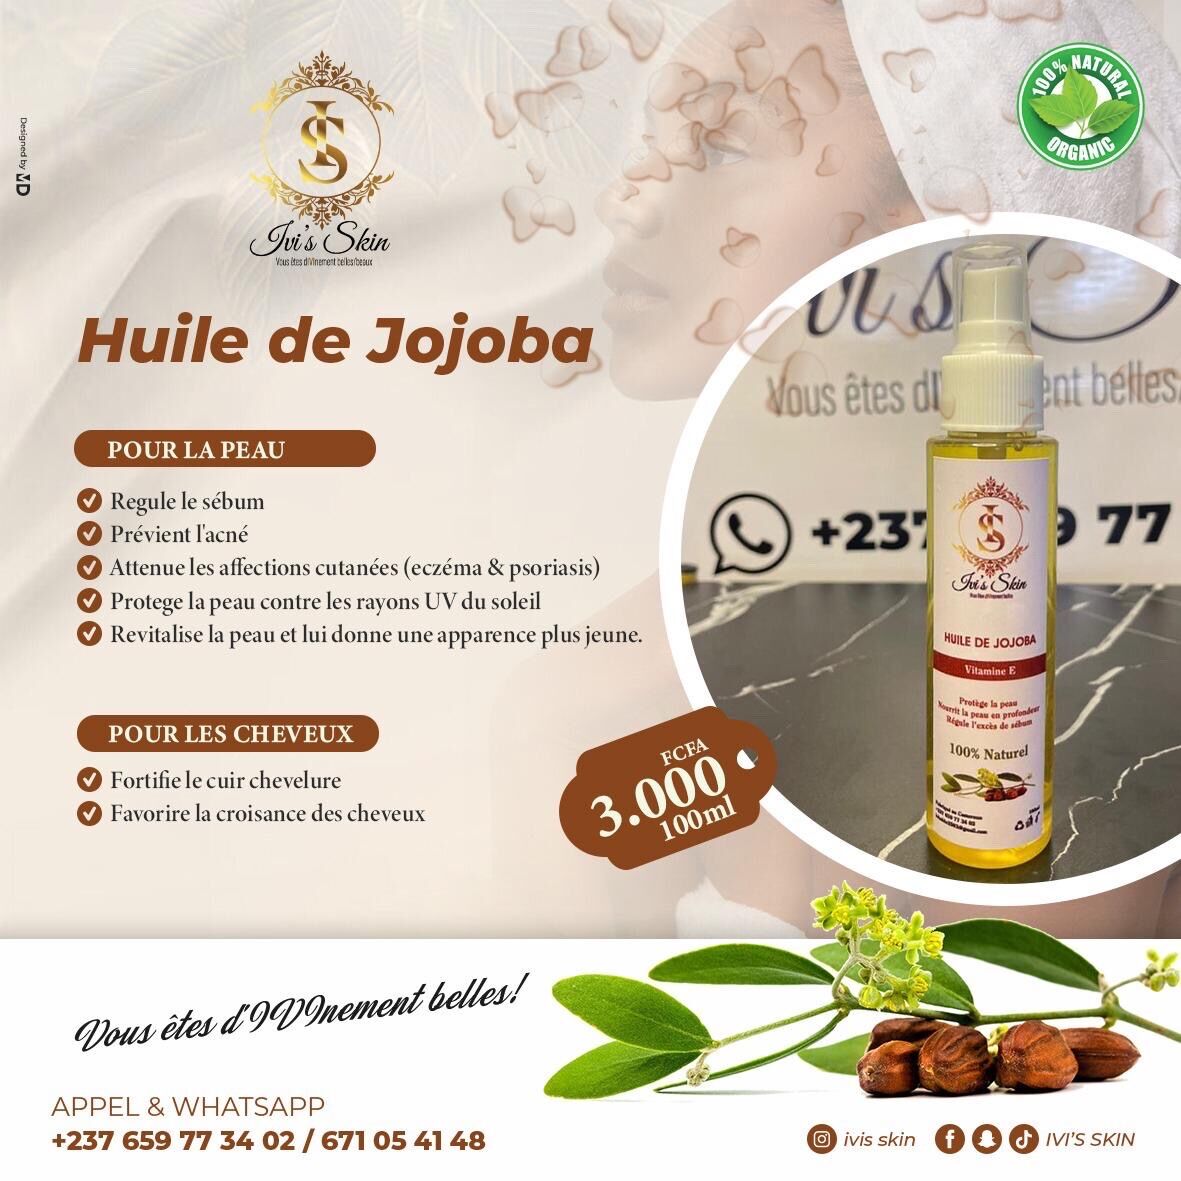 Jojoba oil